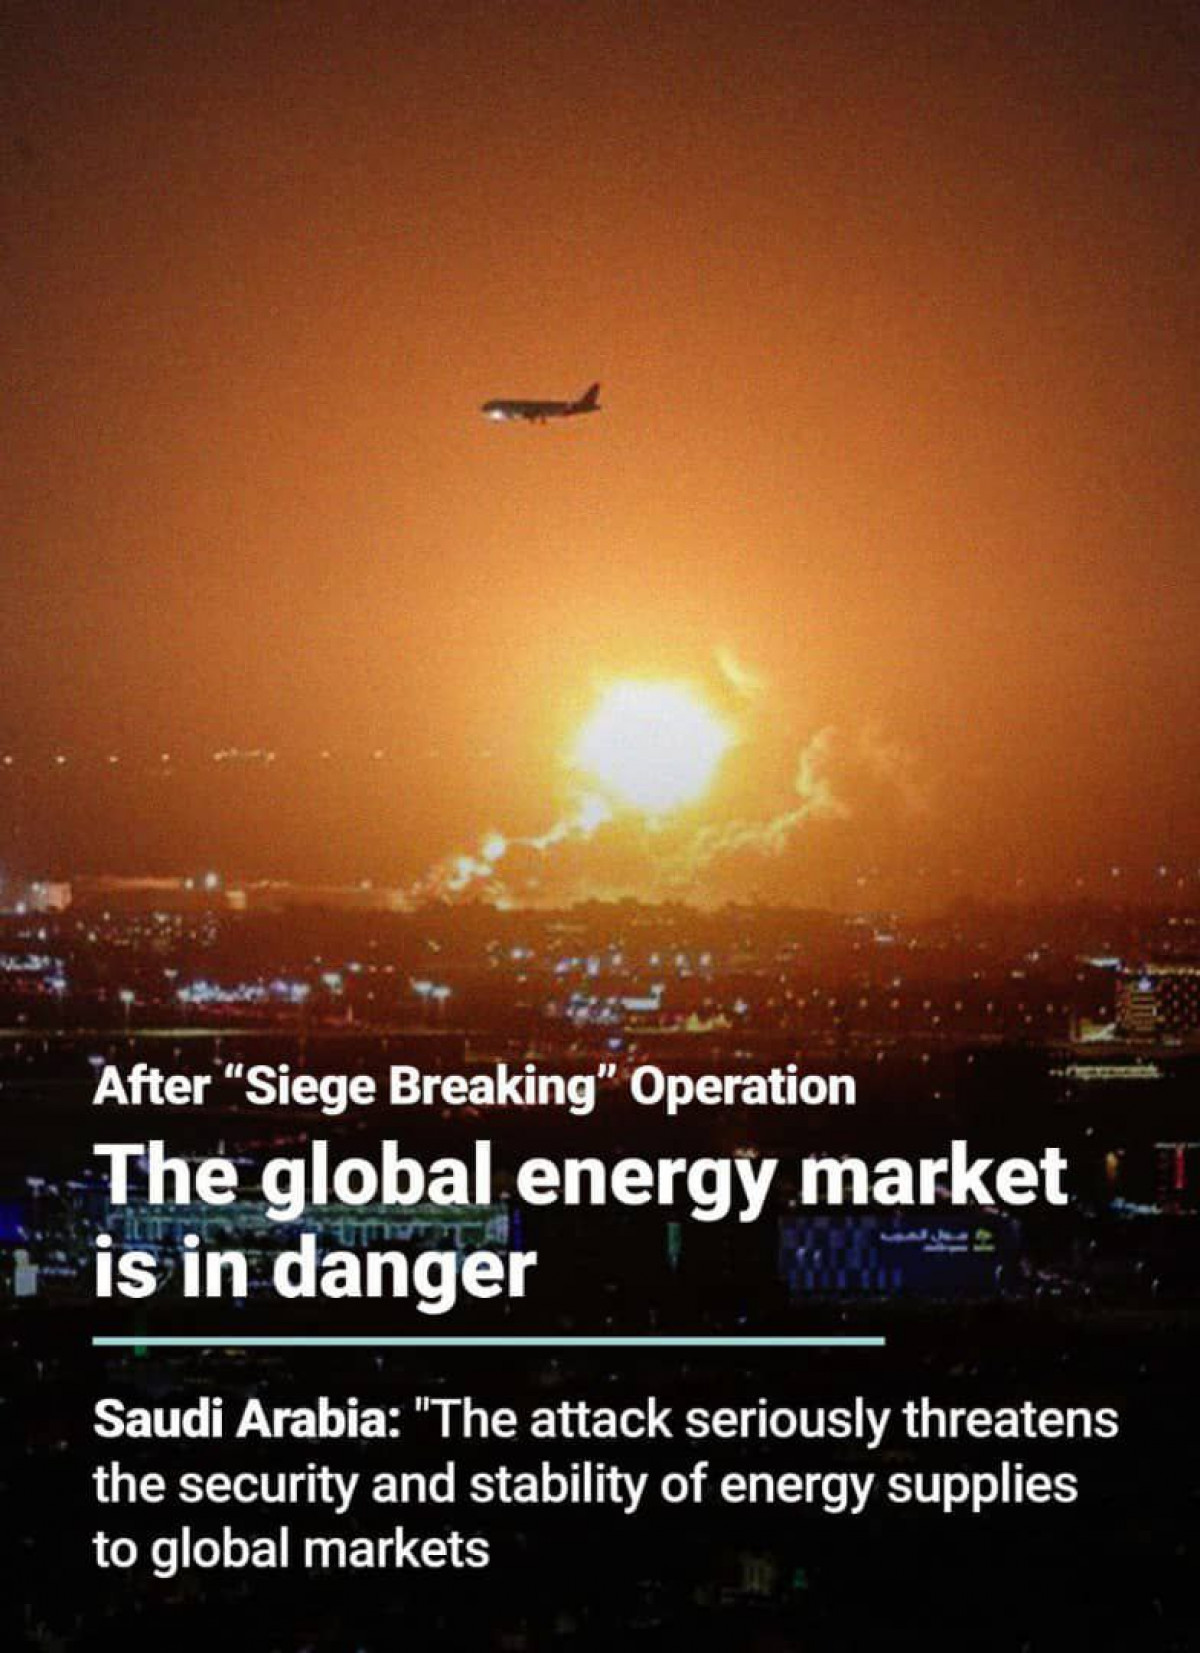 The global energy market is in danger